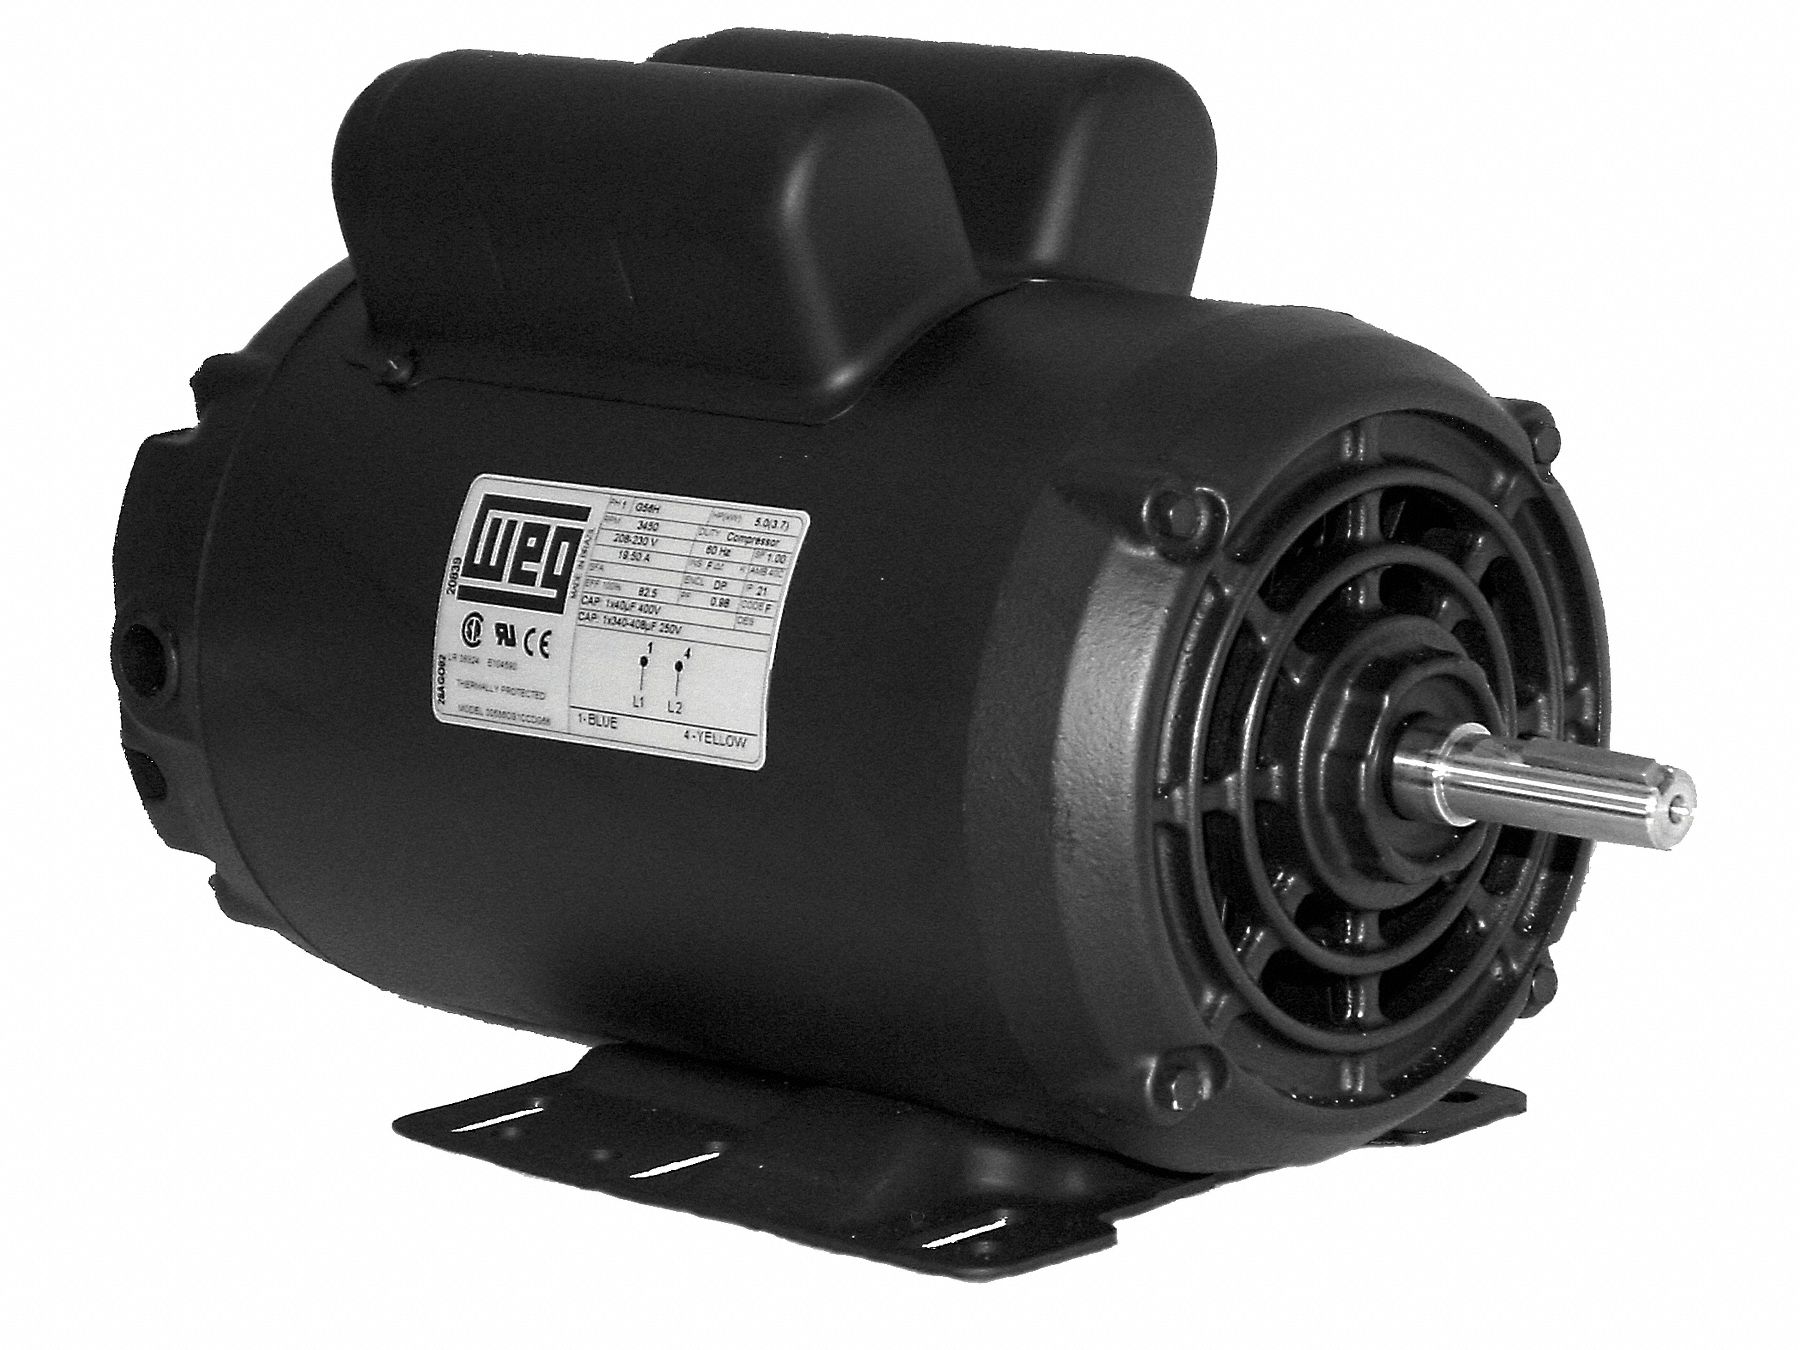 13L296 - Air Compr Motor 4 HP 3440 rpm 230V 56HZ